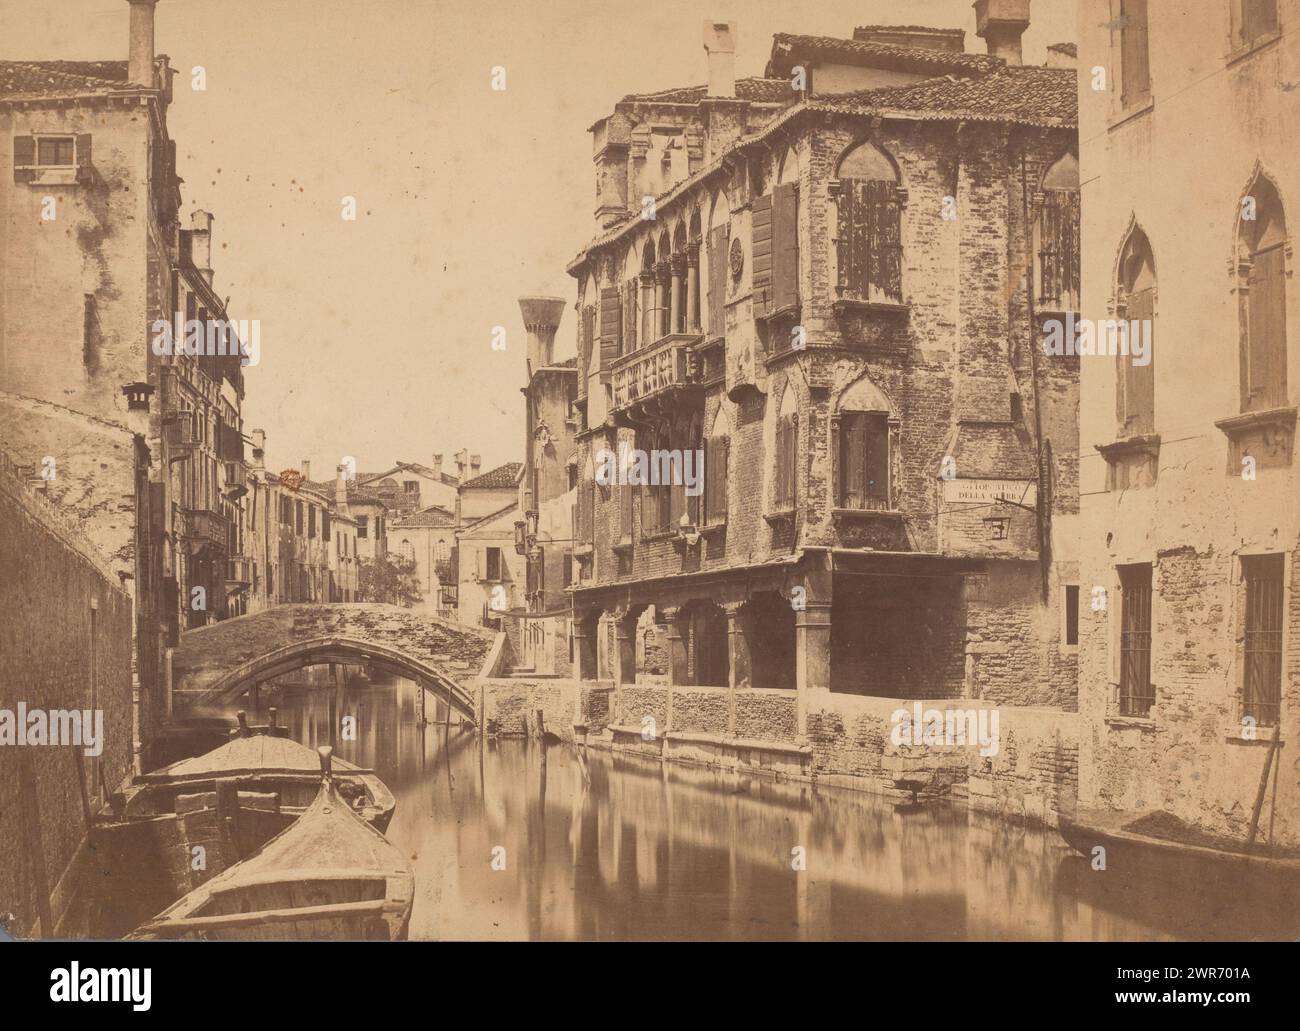 Kanal in Venedig, Italien, Anonym, Venedig, 1851 - 1900, Karton, Albumendruck, Höhe 255 mm x Breite 353 mm, Foto Stockfoto